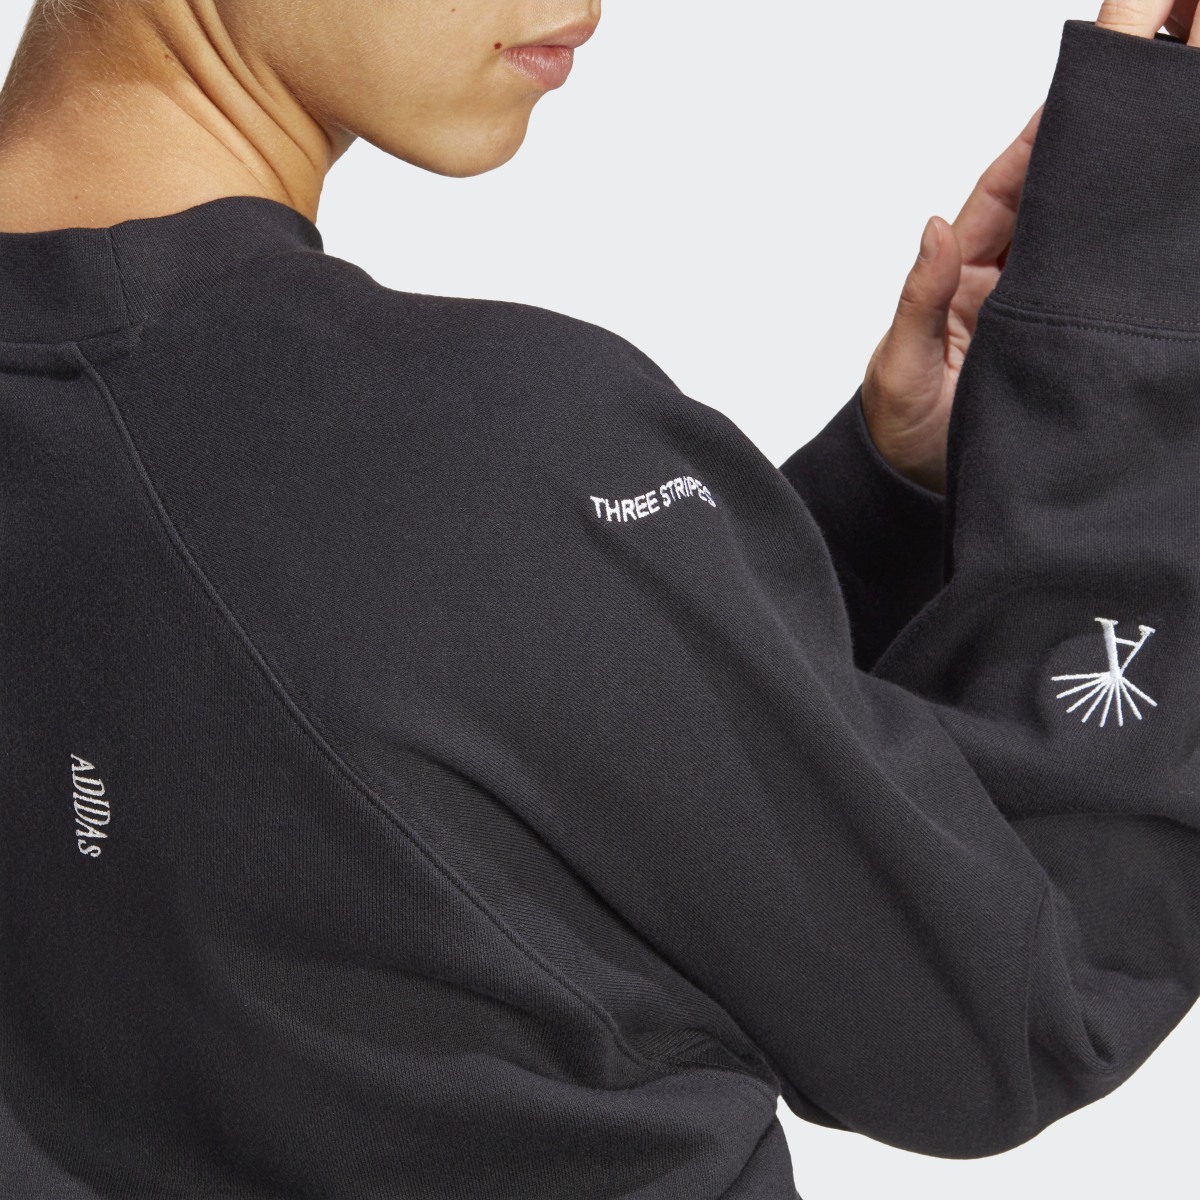 Adidas Sweatshirt Oversize Healing Crystals. 7